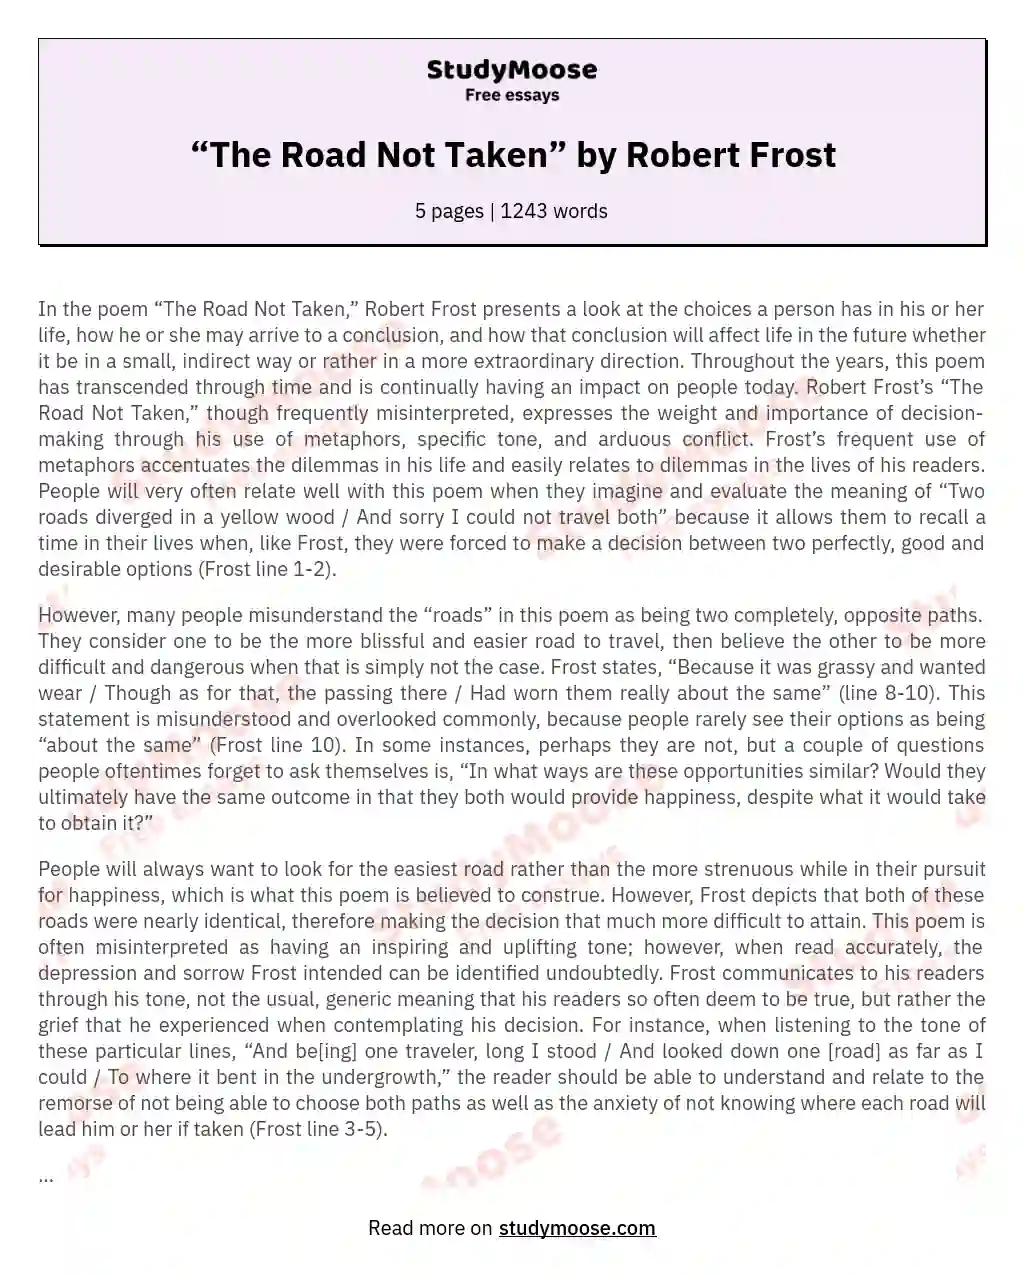 “The Road Not Taken” by Robert Frost essay